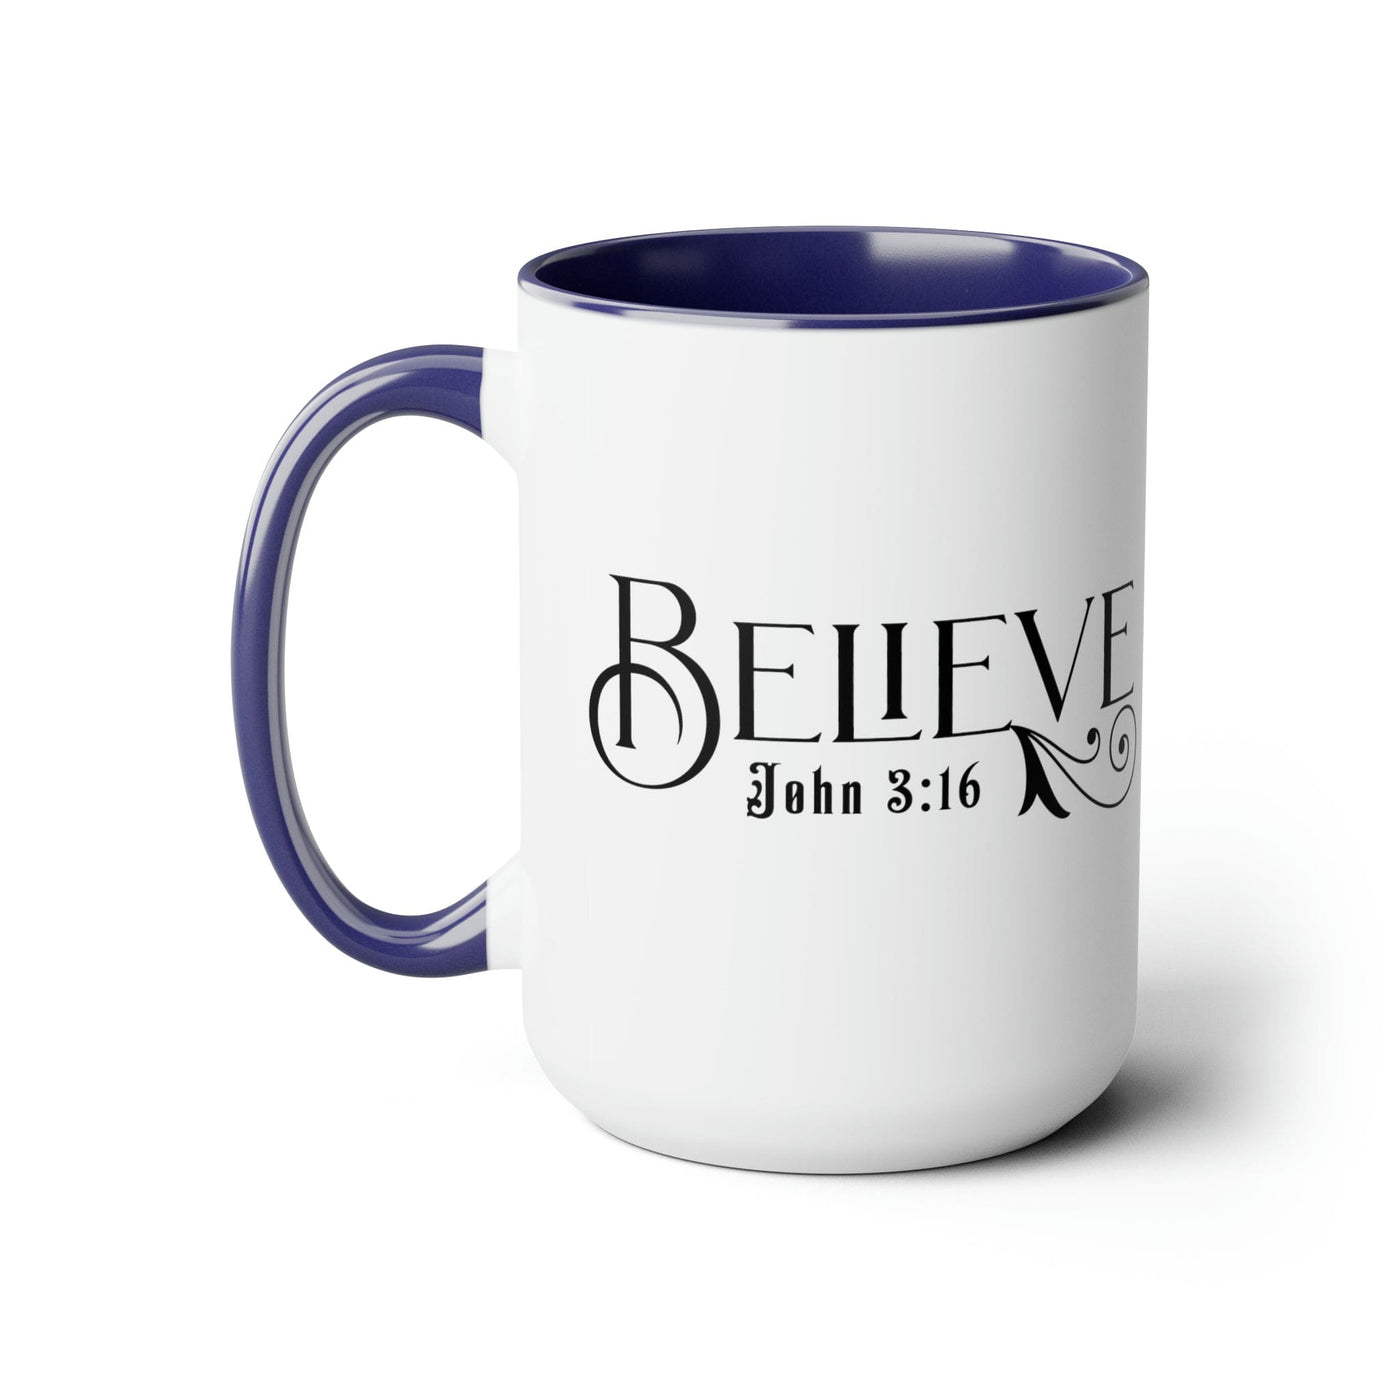 Accent Ceramic Coffee Mug 15oz - Believe John 3:16 Black Illustration -